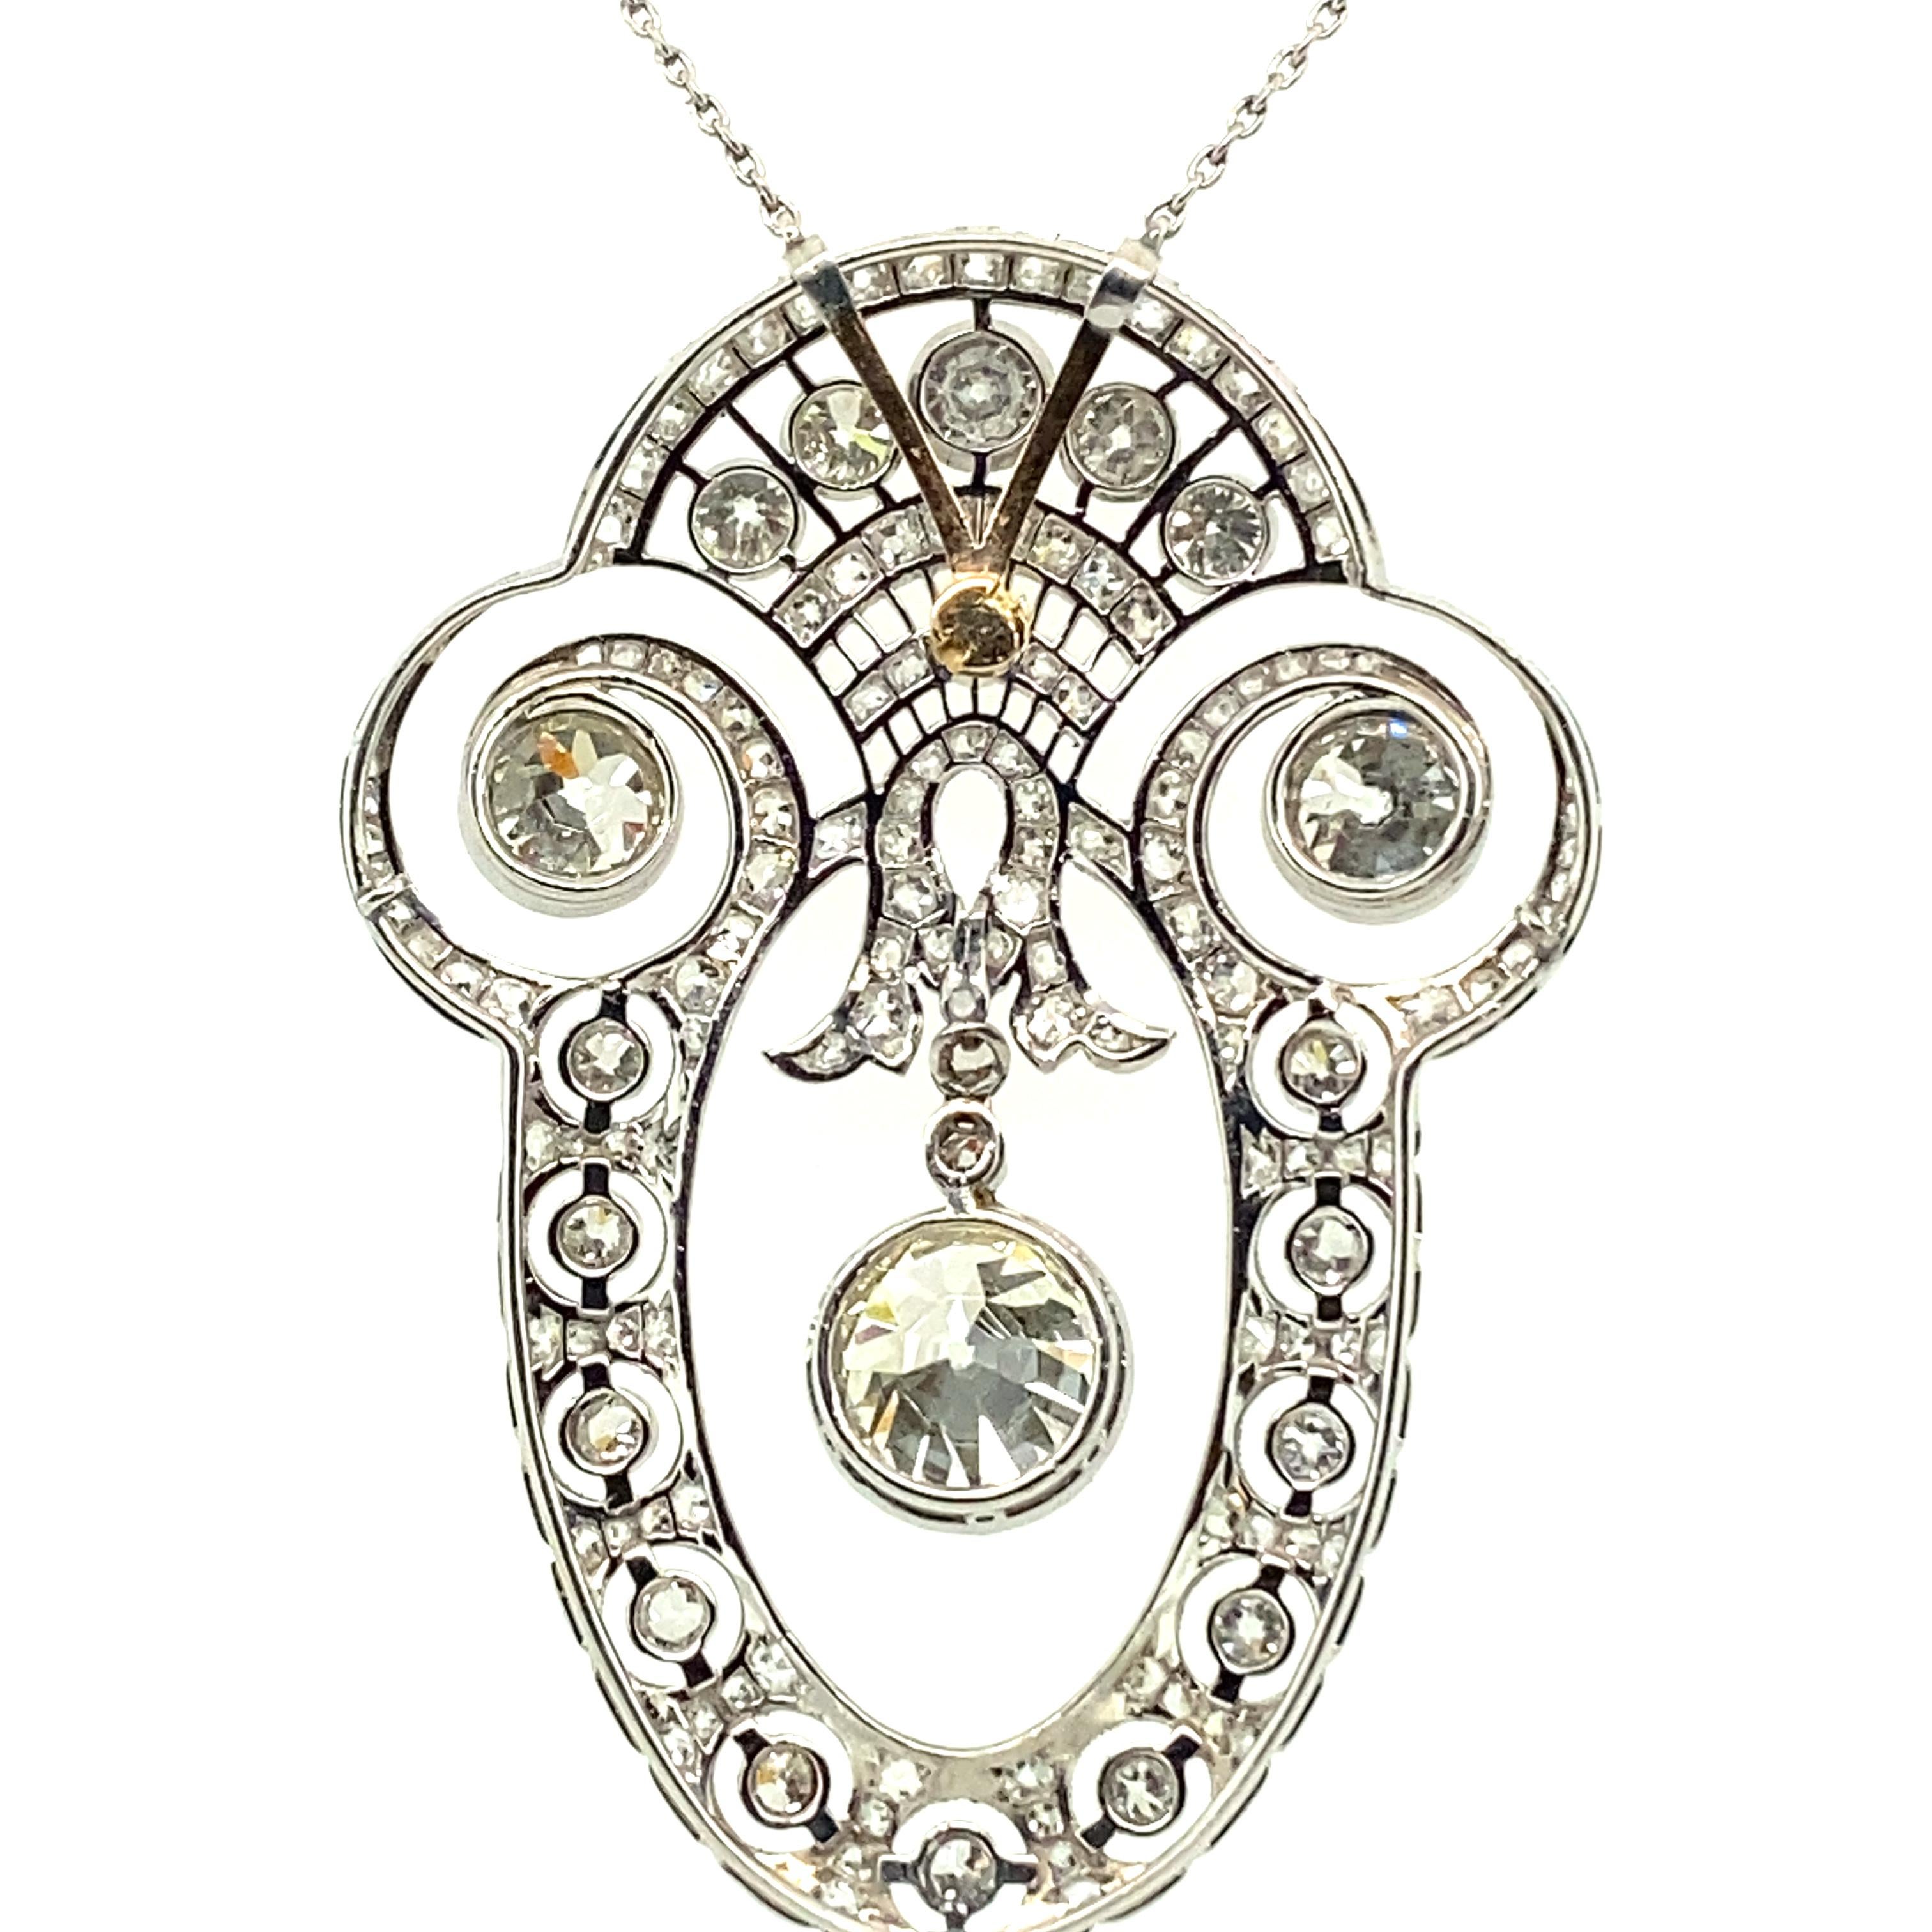 Gorgeous Edwardian Diamond Necklace in Platinum 950 For Sale 8